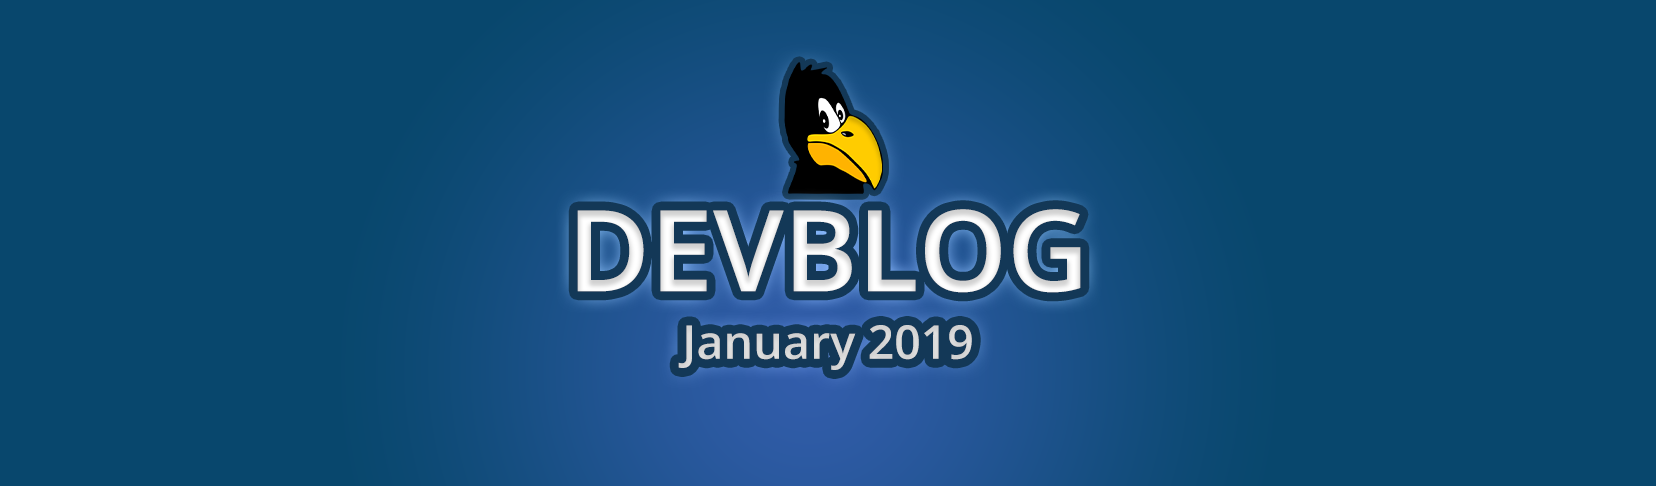 Devblog January 2019